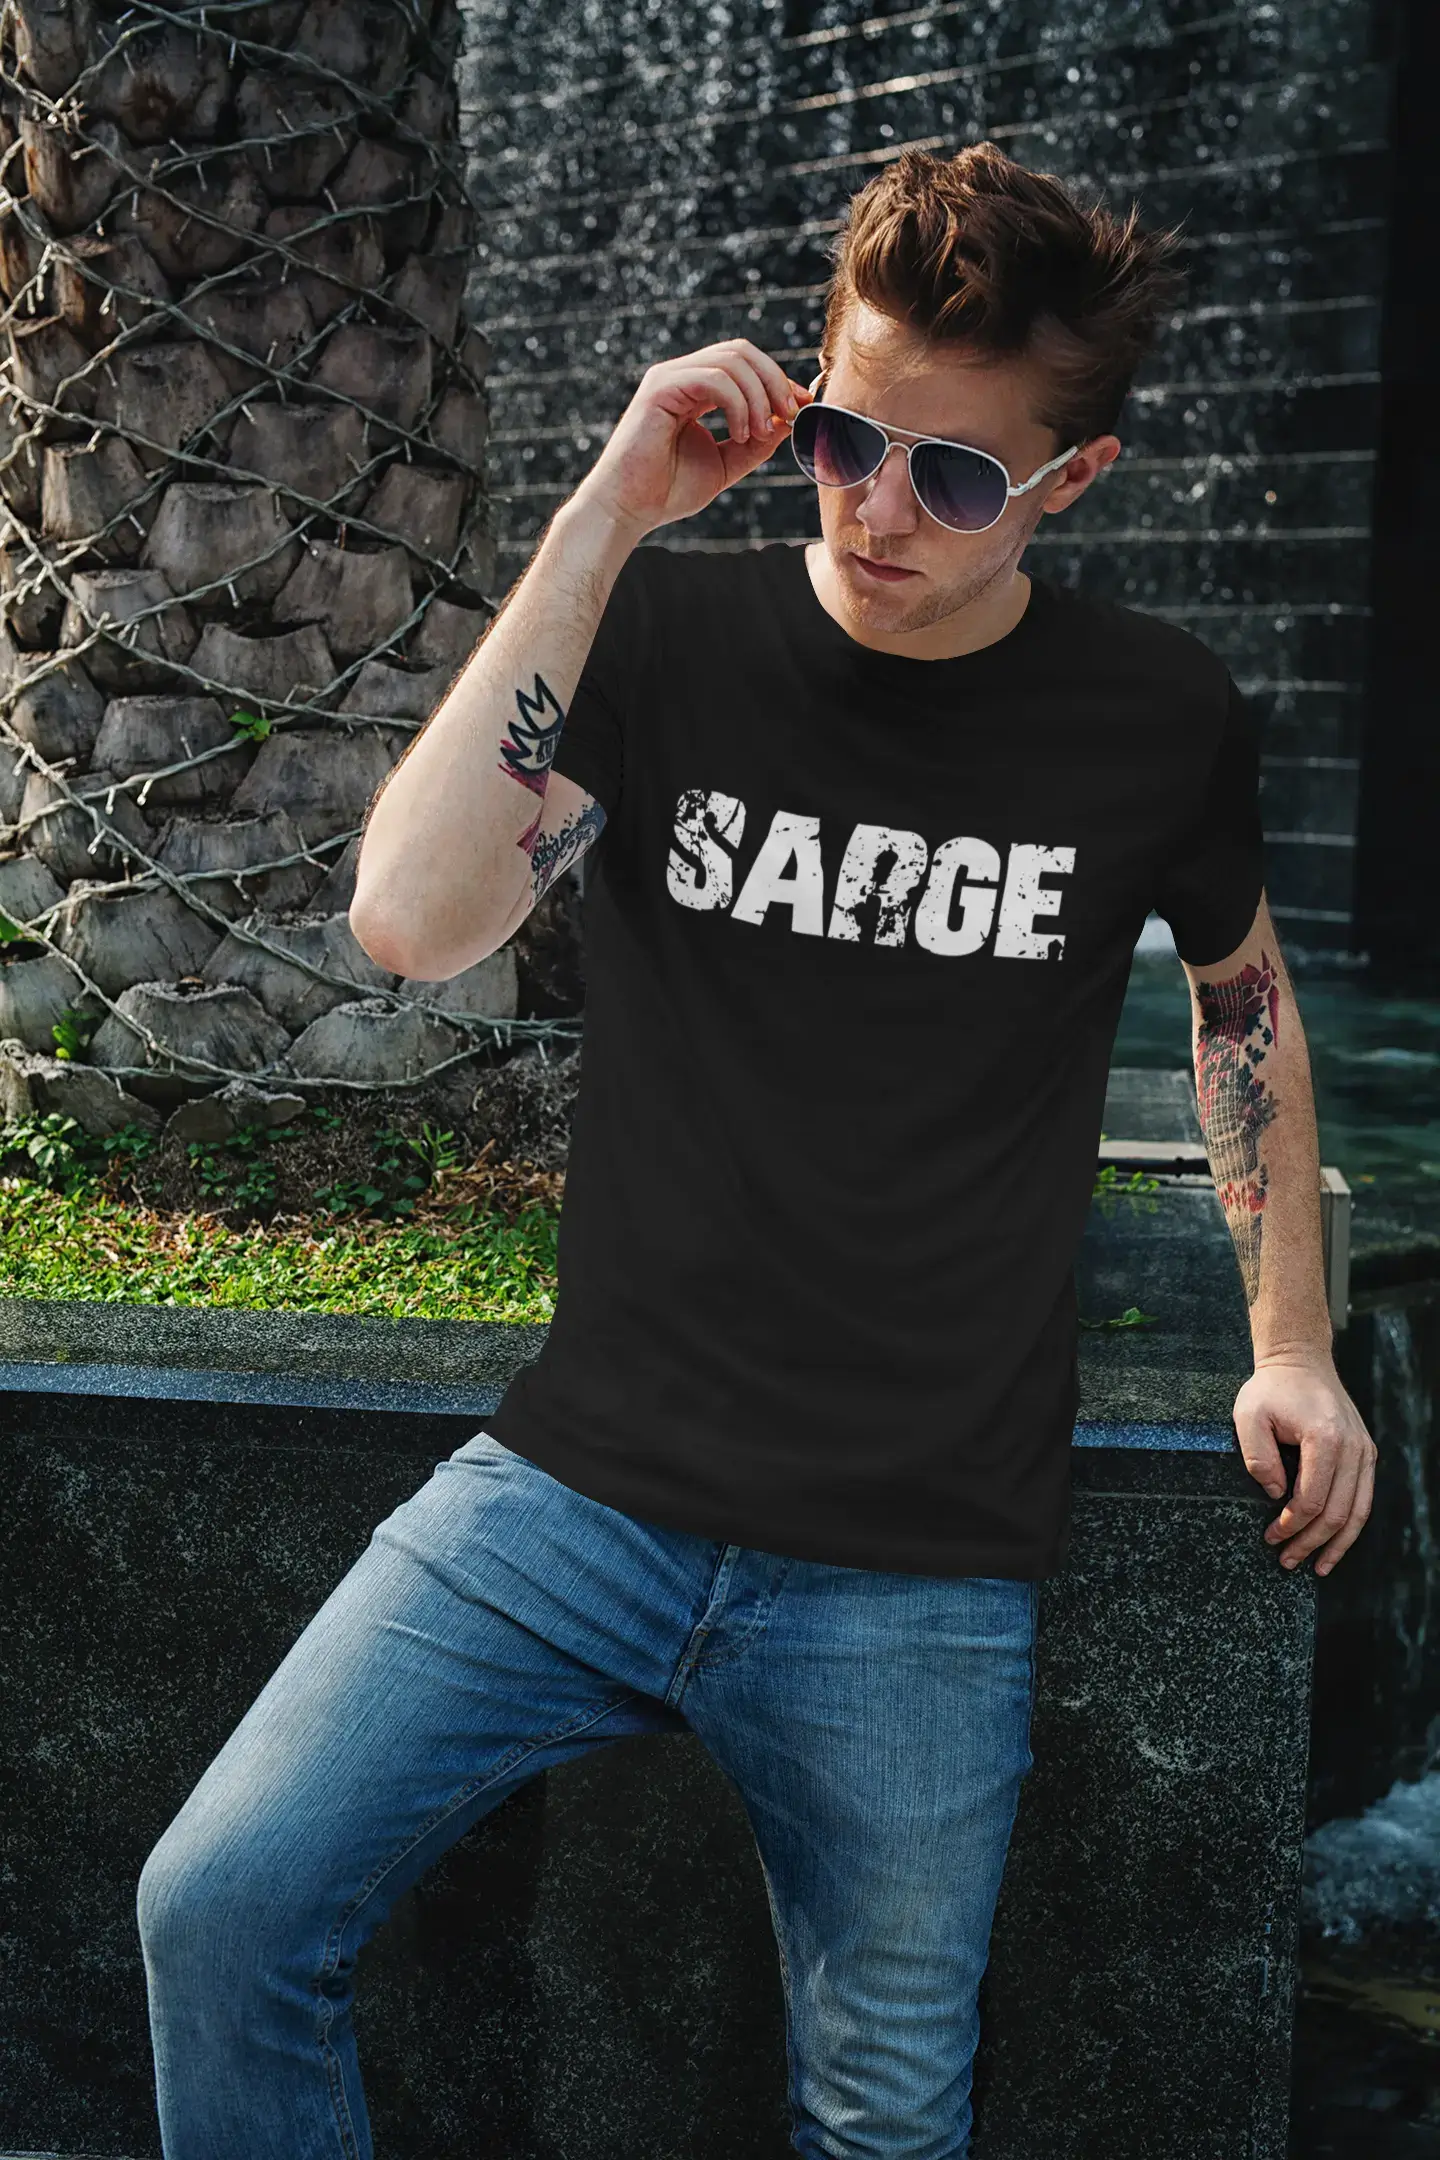 sarge Men's Retro T shirt Black Birthday Gift 00553